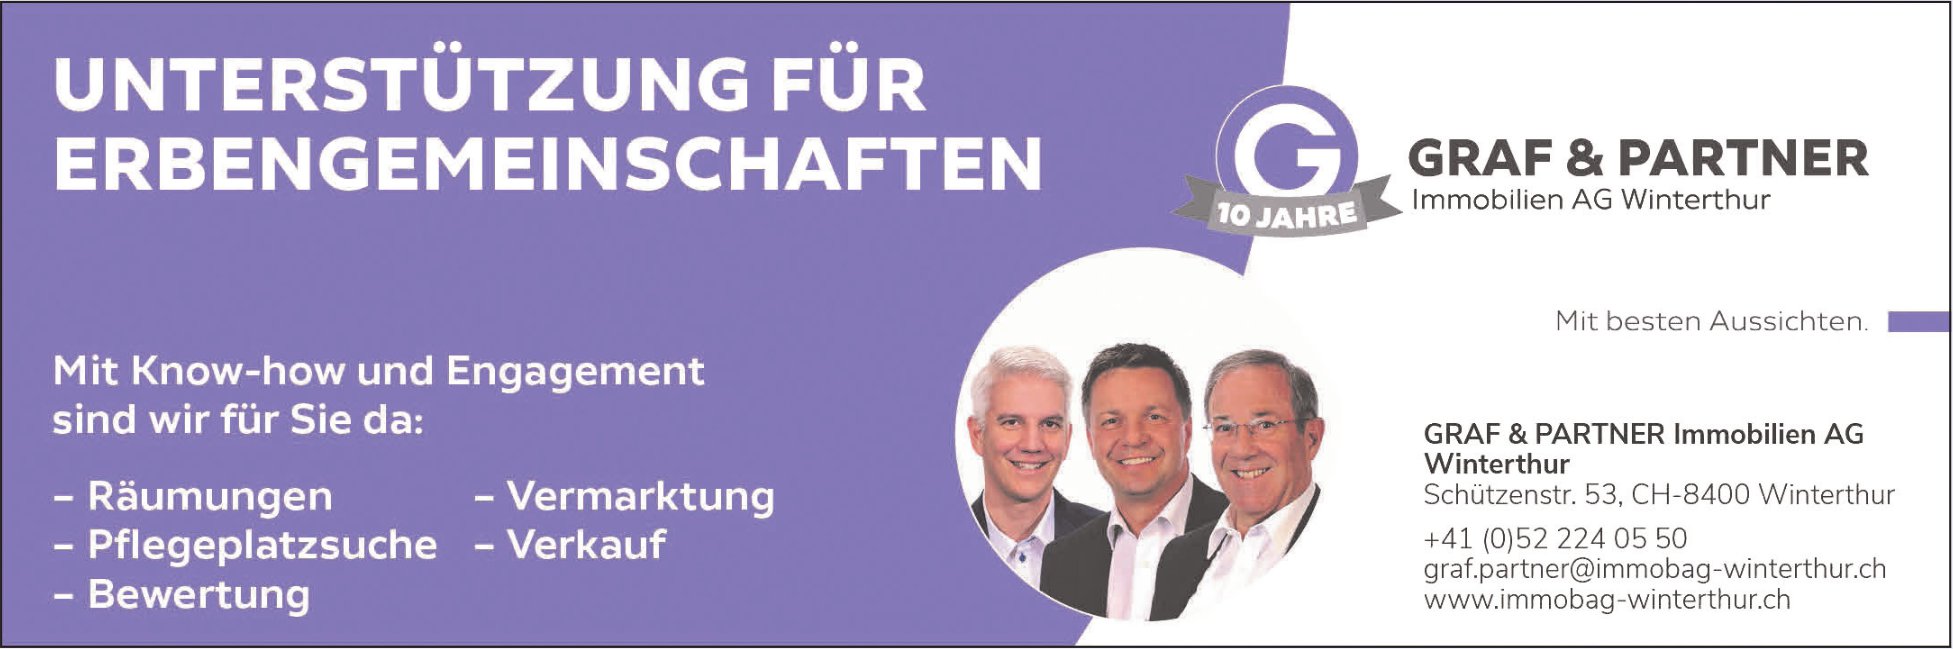 Graf & Partner Immobilien AG, Winterthur - Unterstützung für Erbengemeinschaften